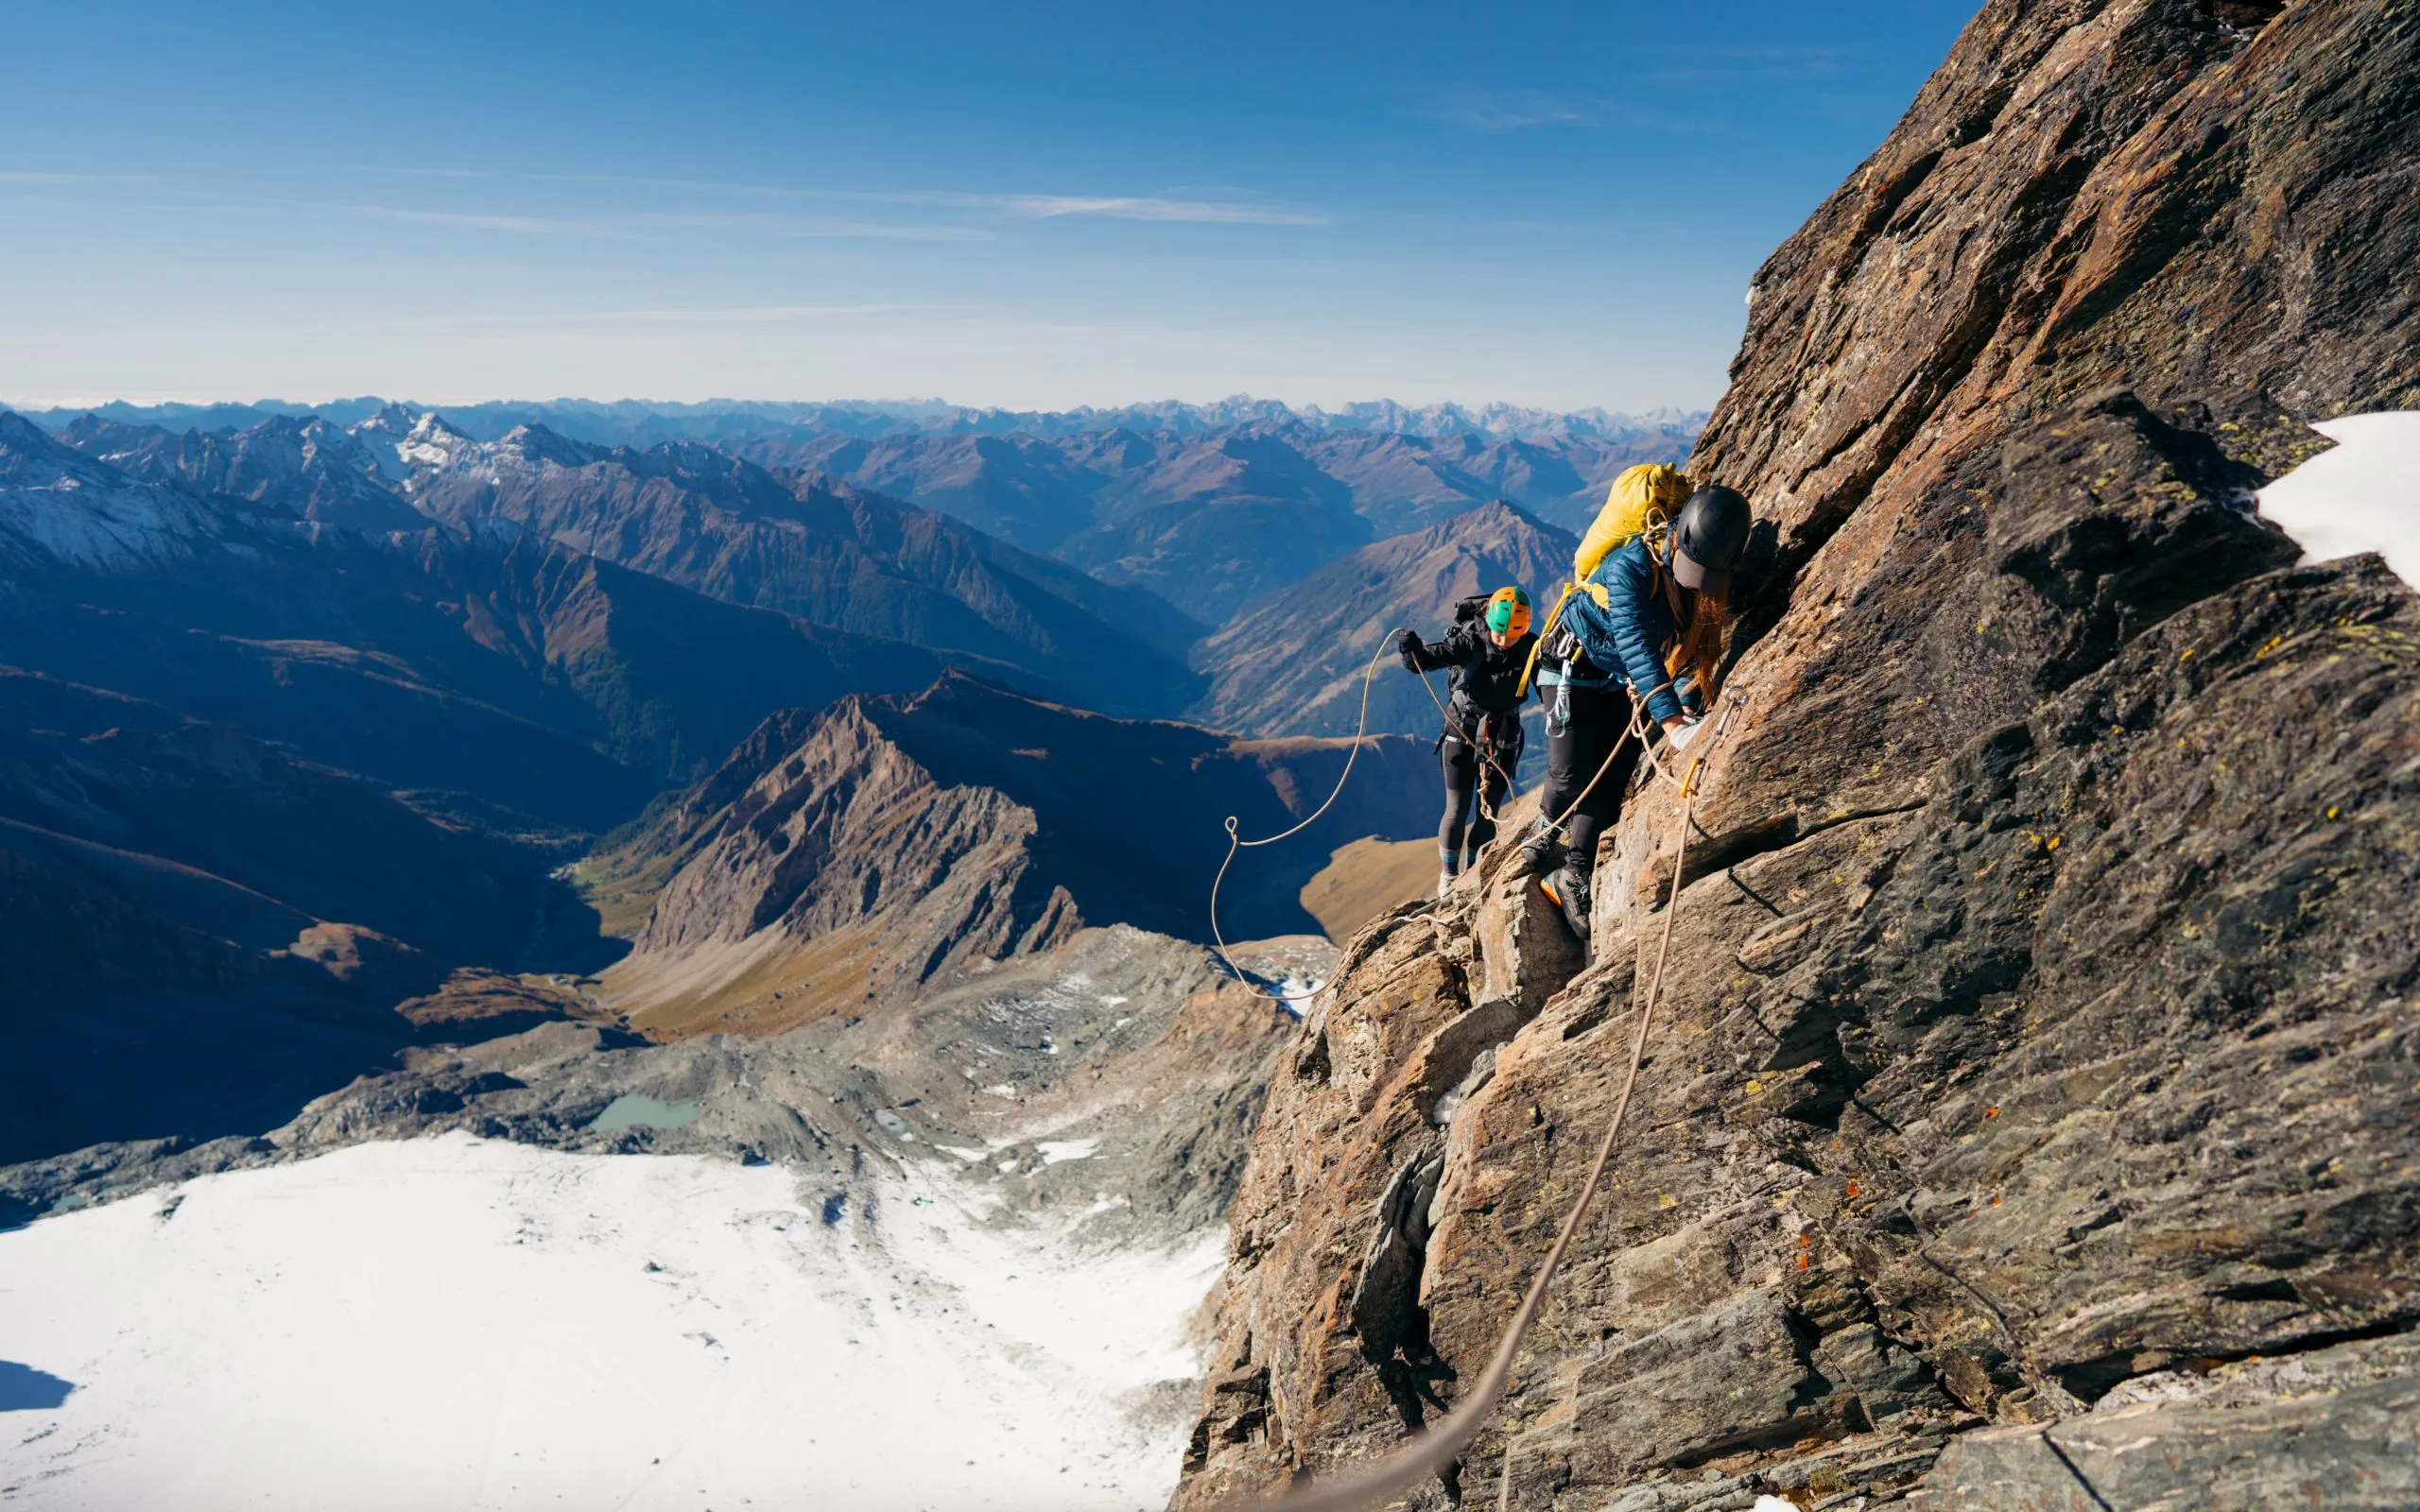 Felskletterer am Studlgrat des Großglockners, dem höchsten Berg Österreichs. Konzept des alpinen Bergsteigens.